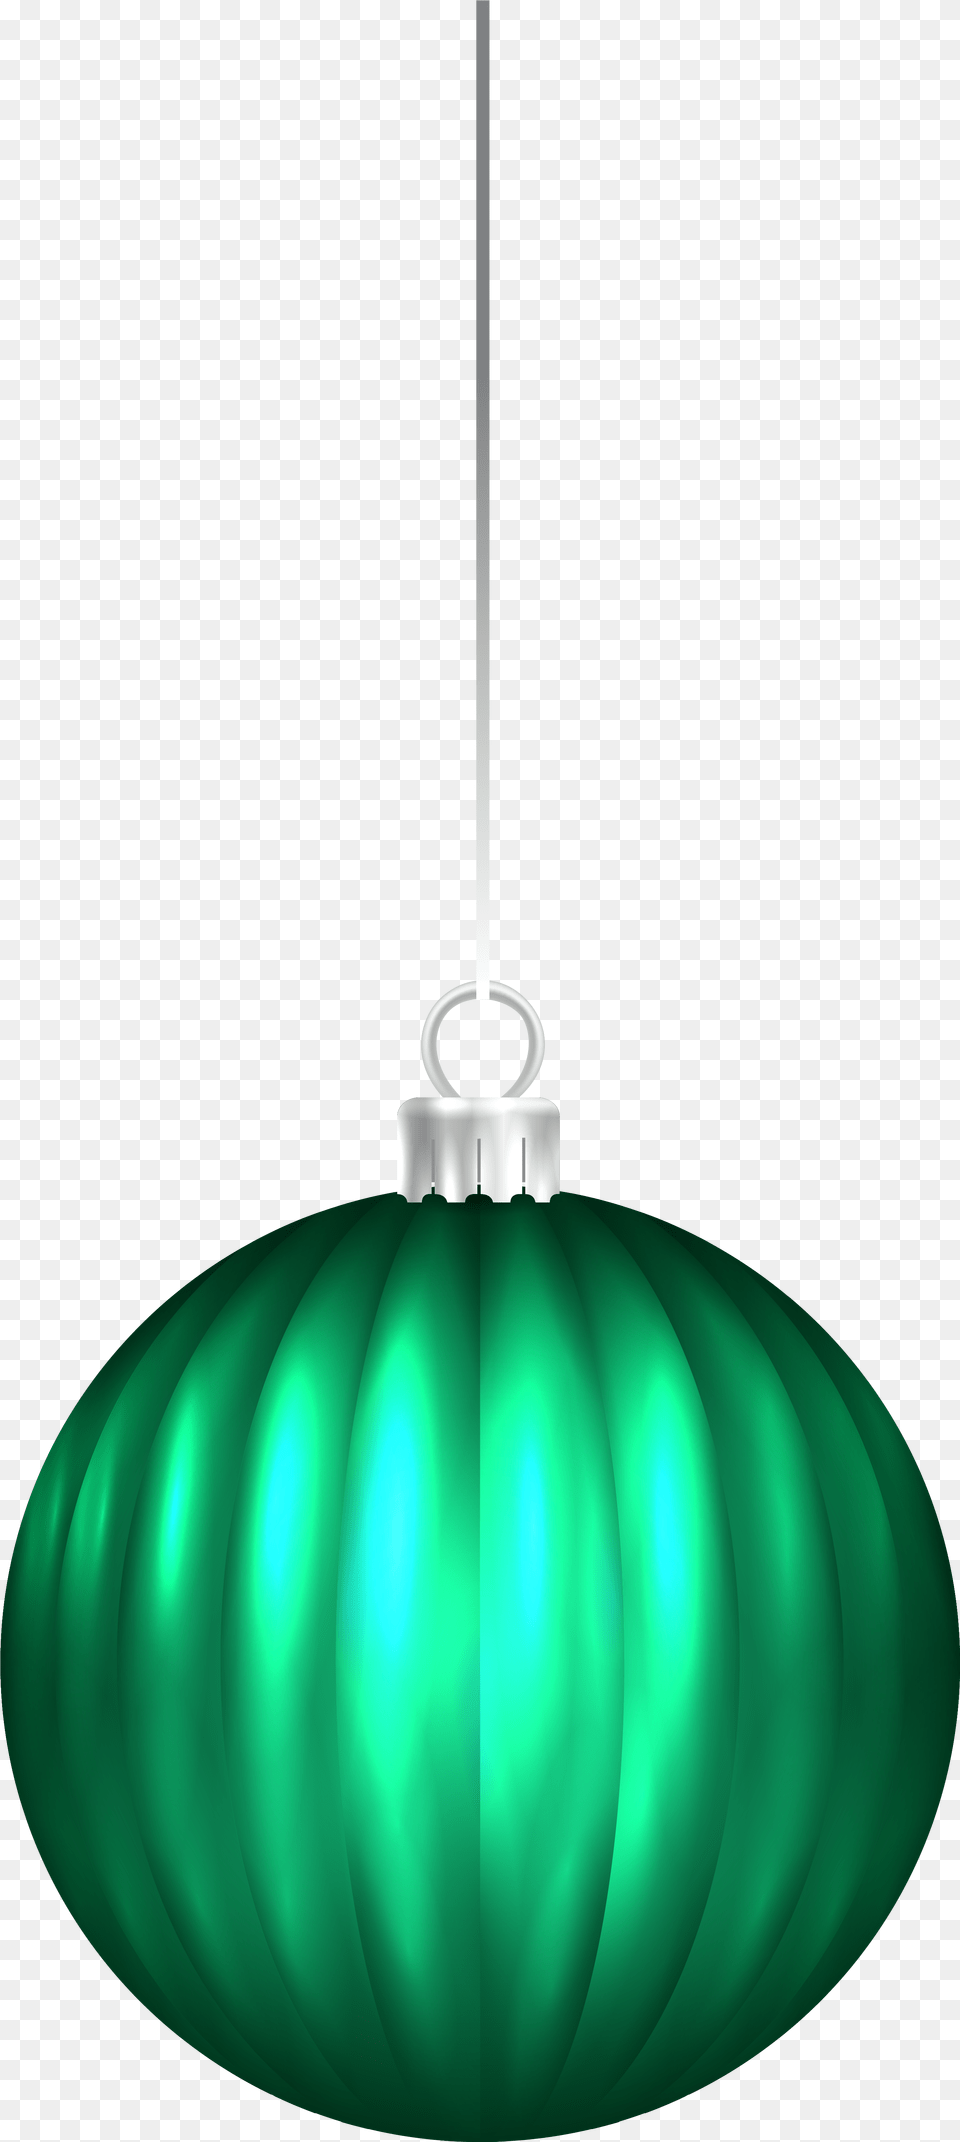 Green Christmas Ornament Christmas Ornament, Lighting, Lamp, Light Fixture, Accessories Png